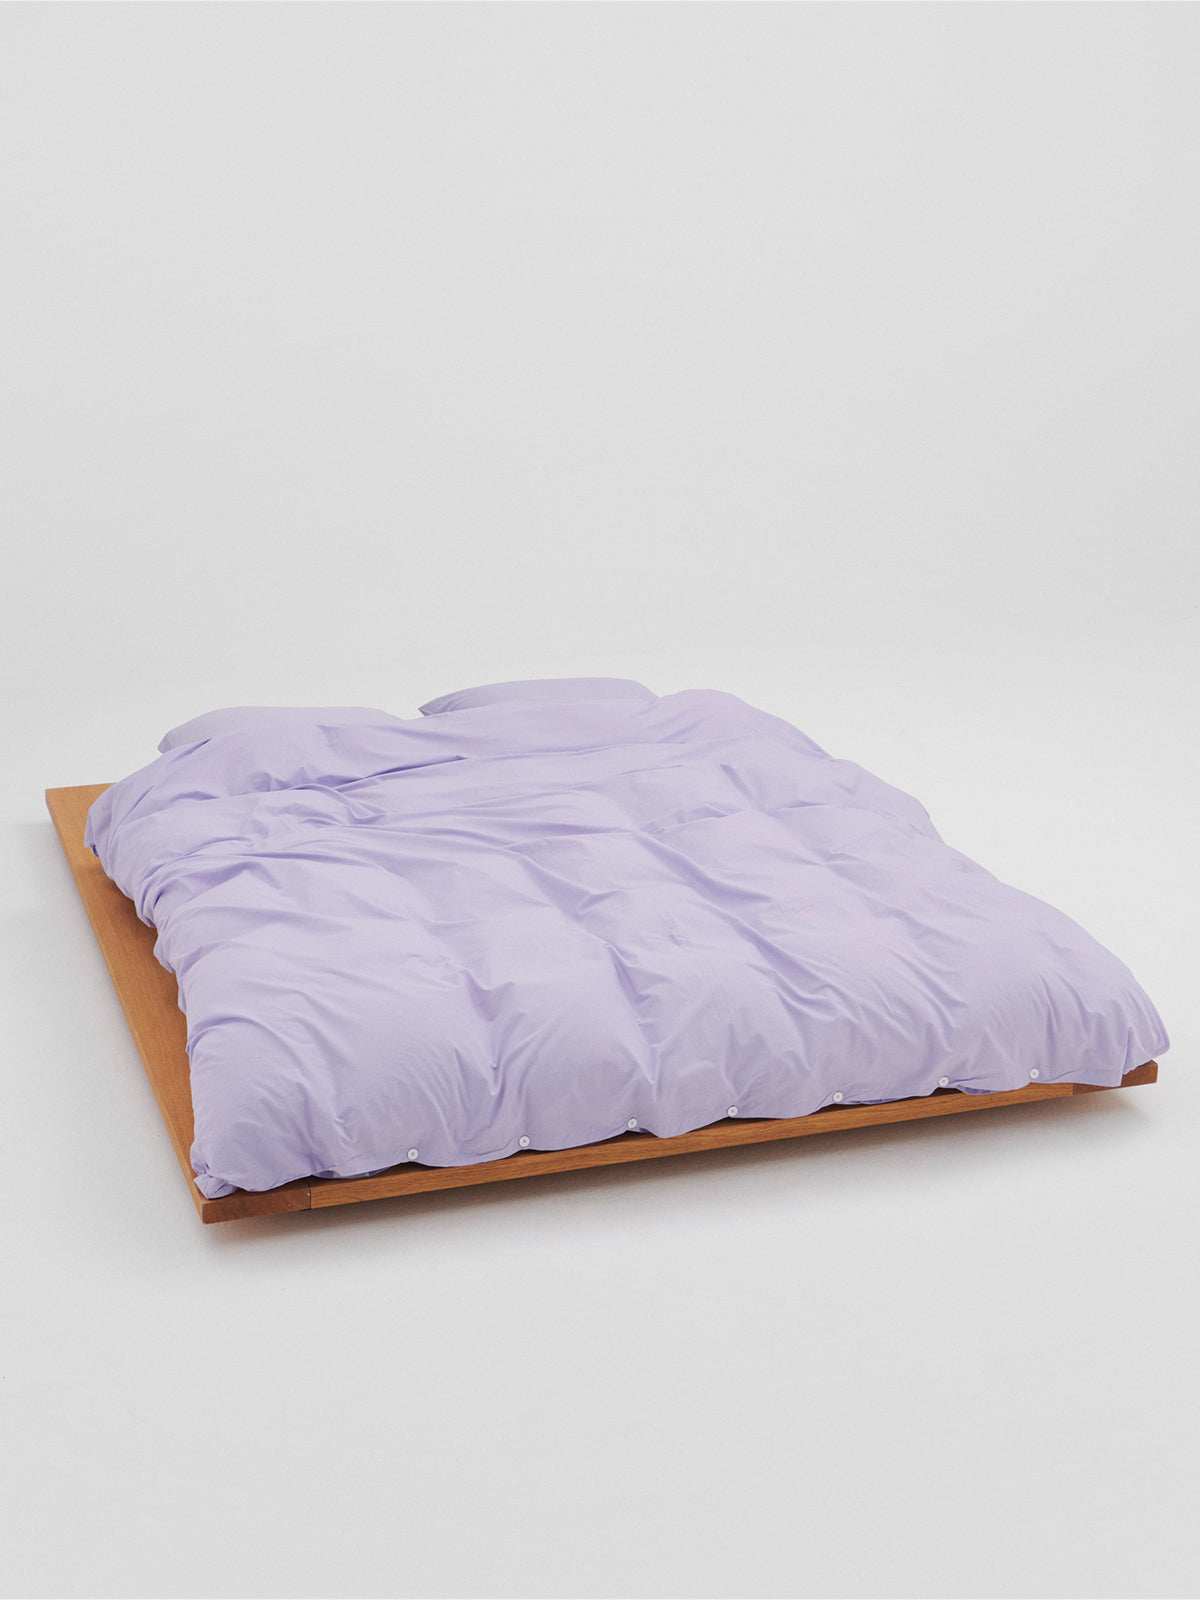 Tekla - Percale Duvet Cover in Lavender